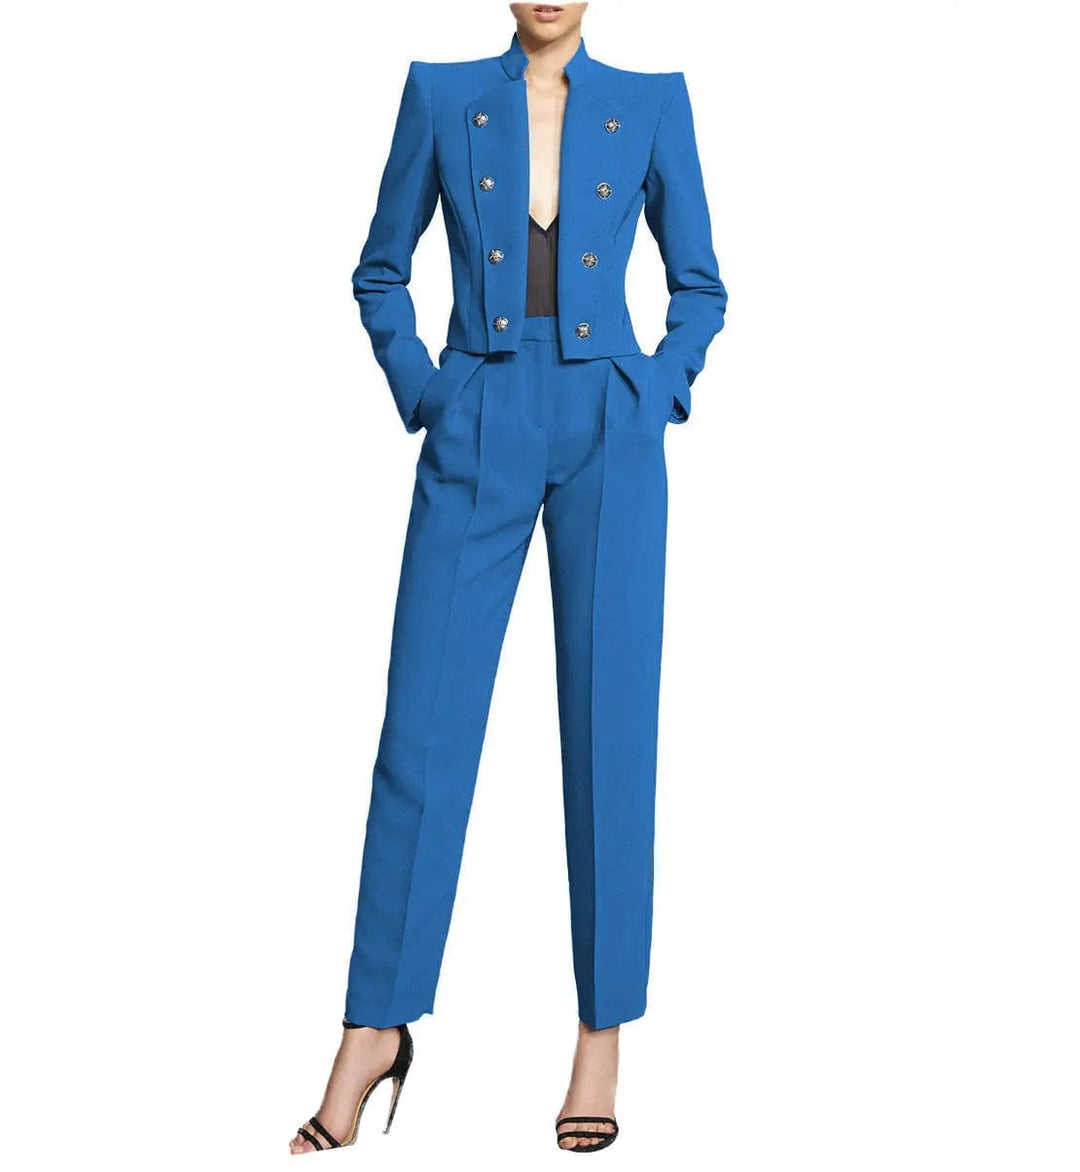 solovedress Women's 2 Piece Suit Fashion Slim Fit Blazer